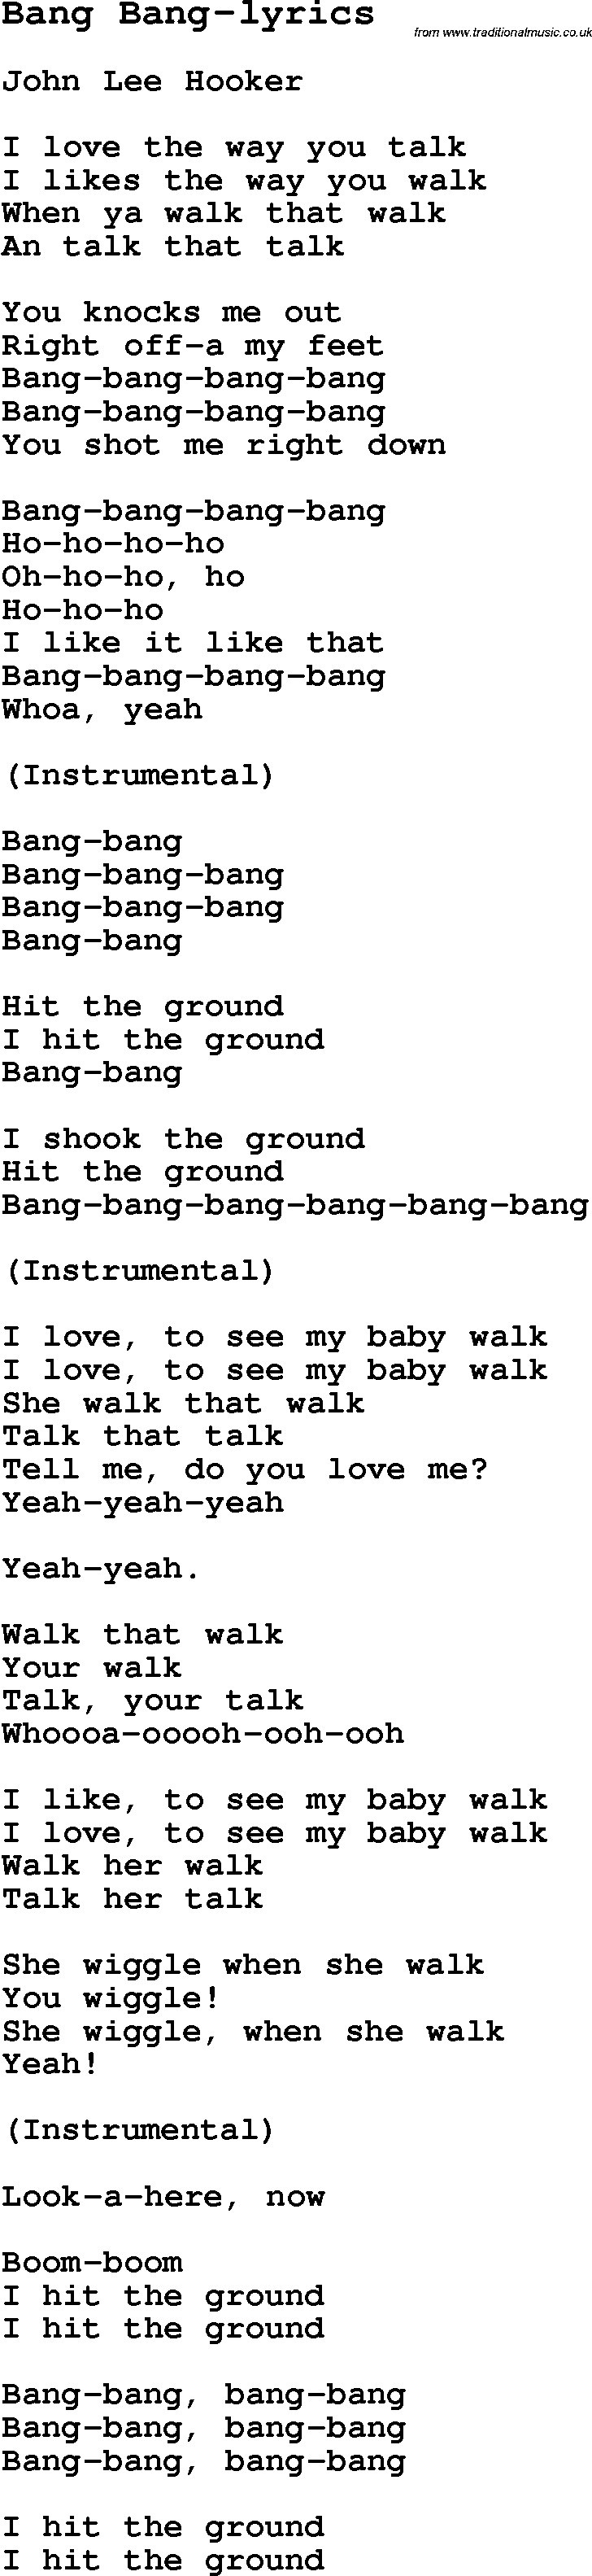 Blues Guitar Song, lyrics, chords, tablature, playing hints for Bang Bang-lyrics